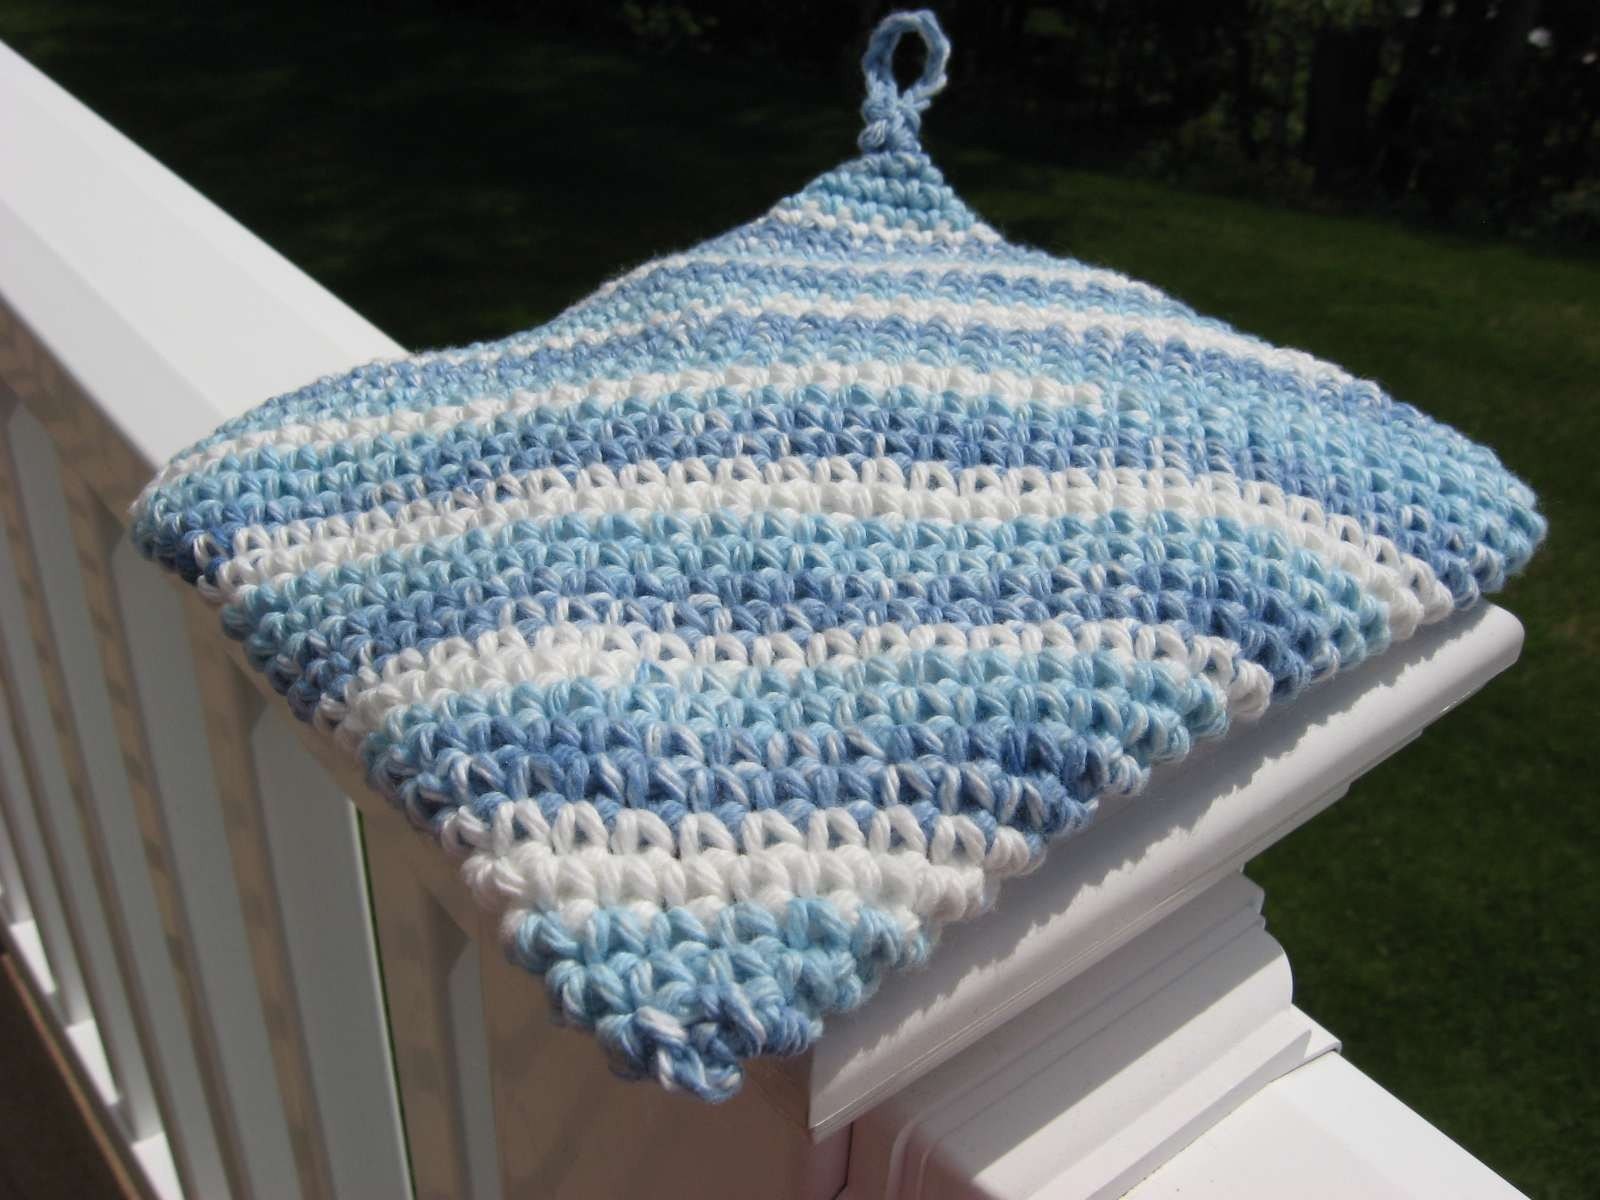 Crocheted Cotton Hotpad/Potholder by HookedOnNeedles on Etsy